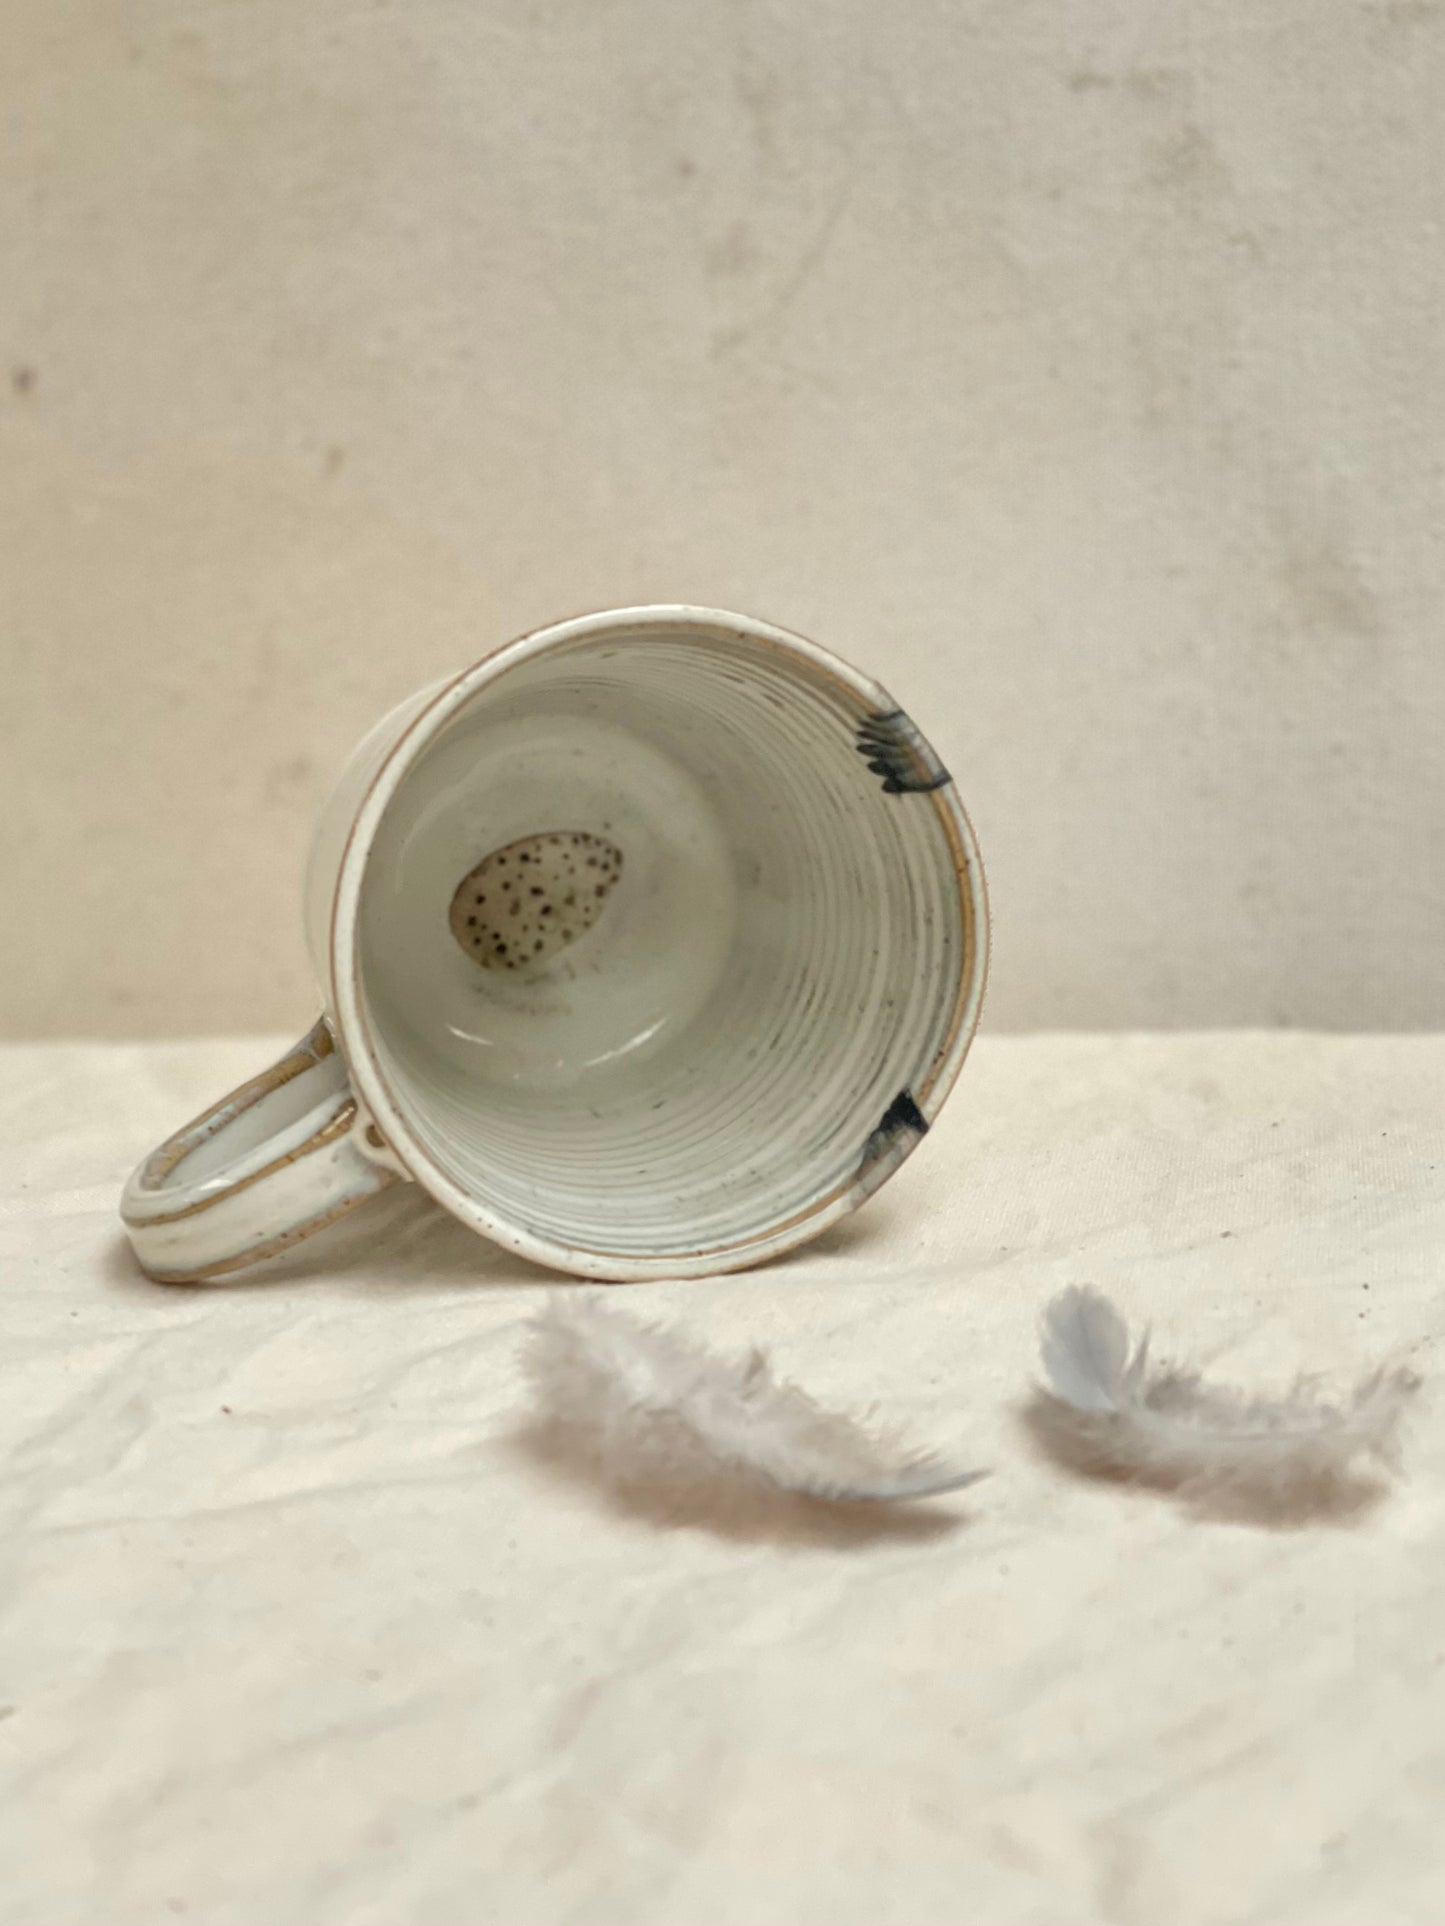 *New, PRE-ORDER* Gull Mug 330ml - Nina Paloma Ceramics